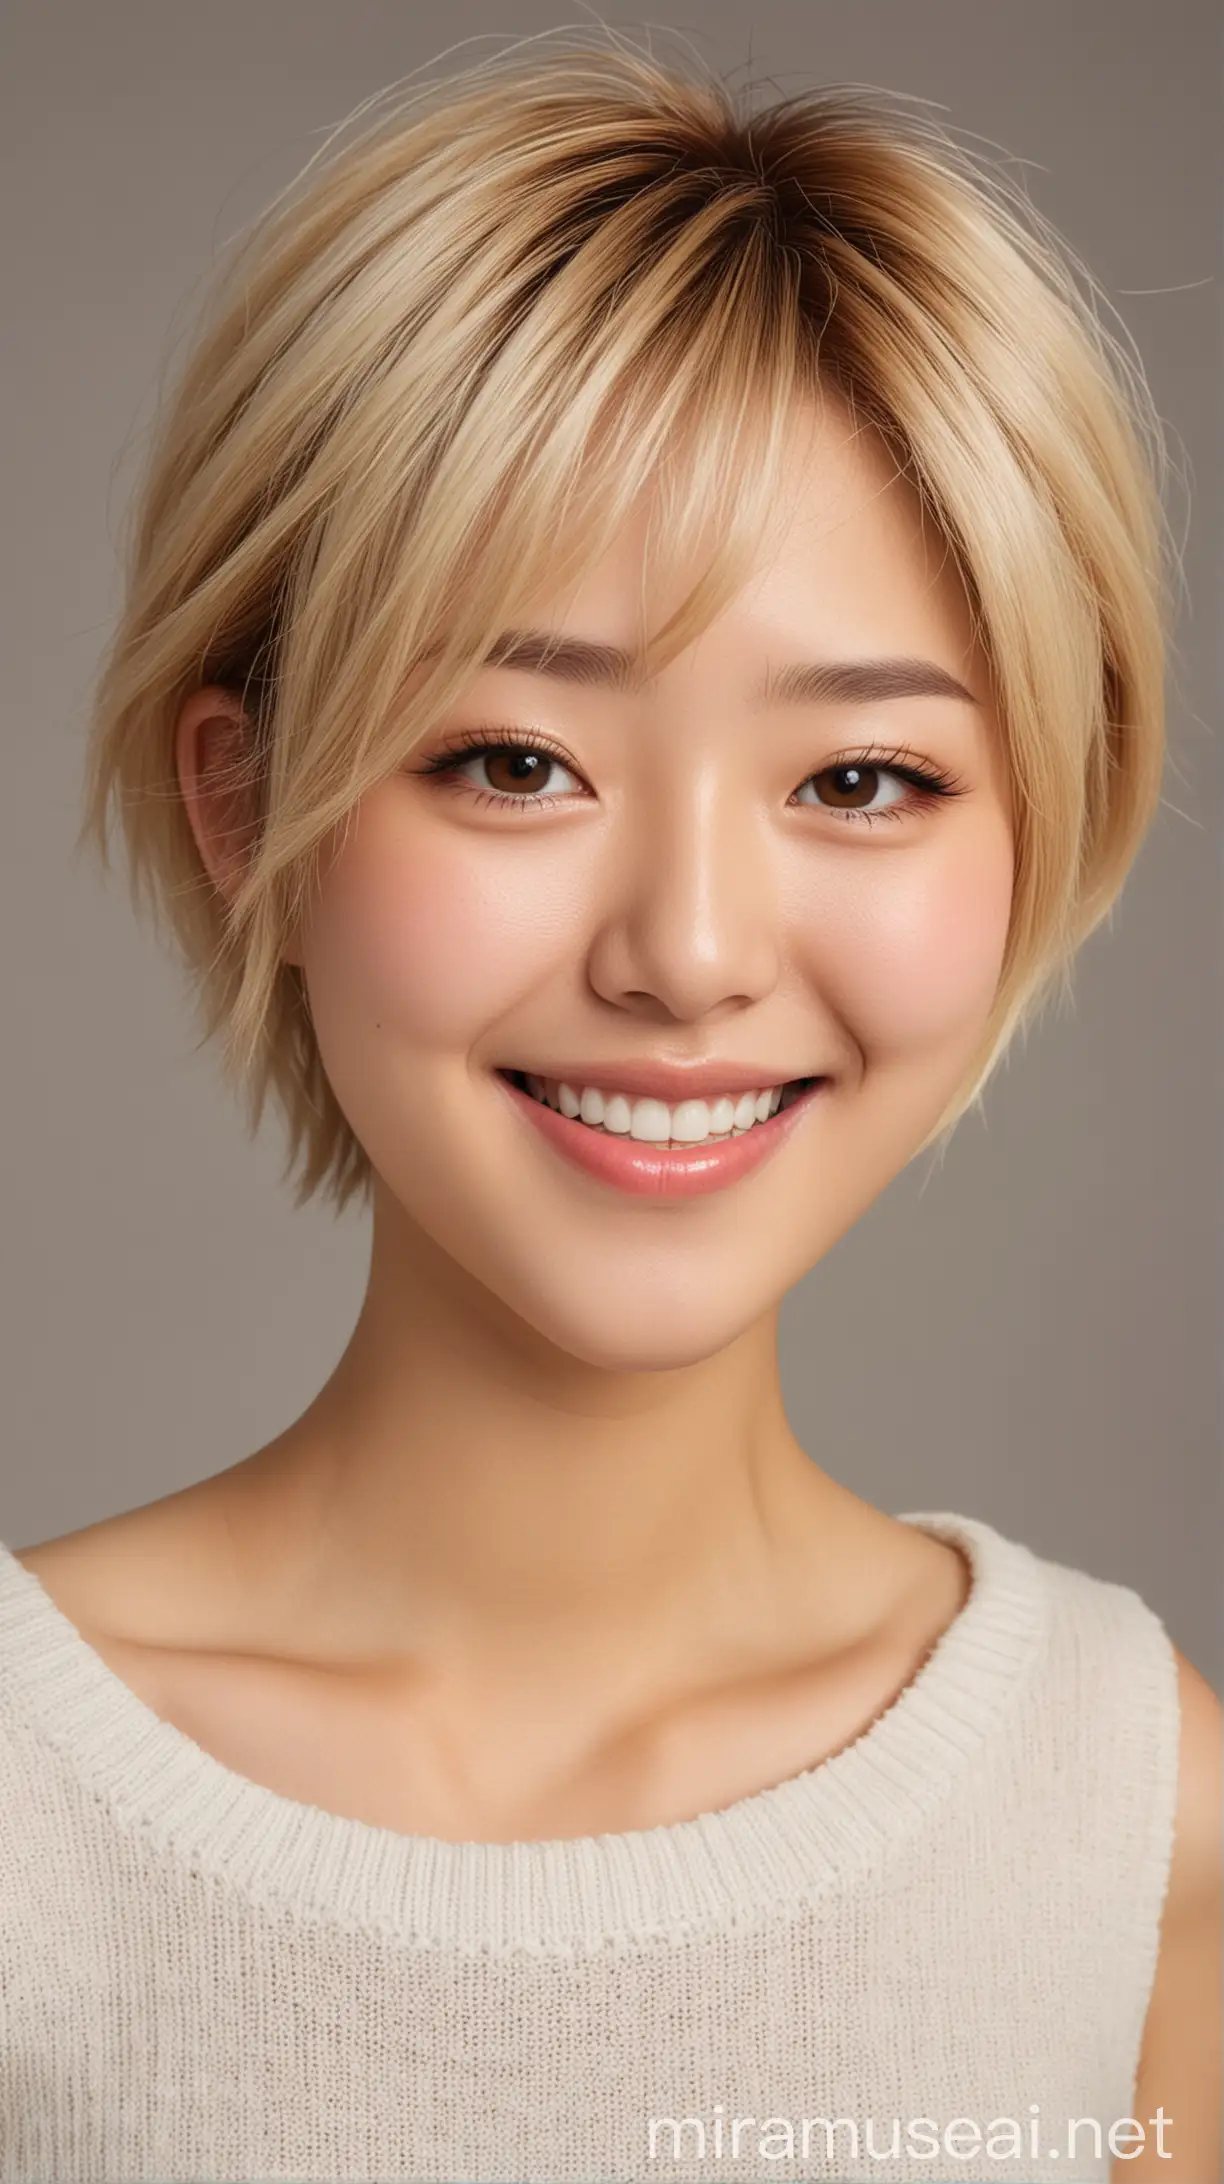 Joyful Japanese Woman in White Sleeveless Sweater with Blond Short Hair